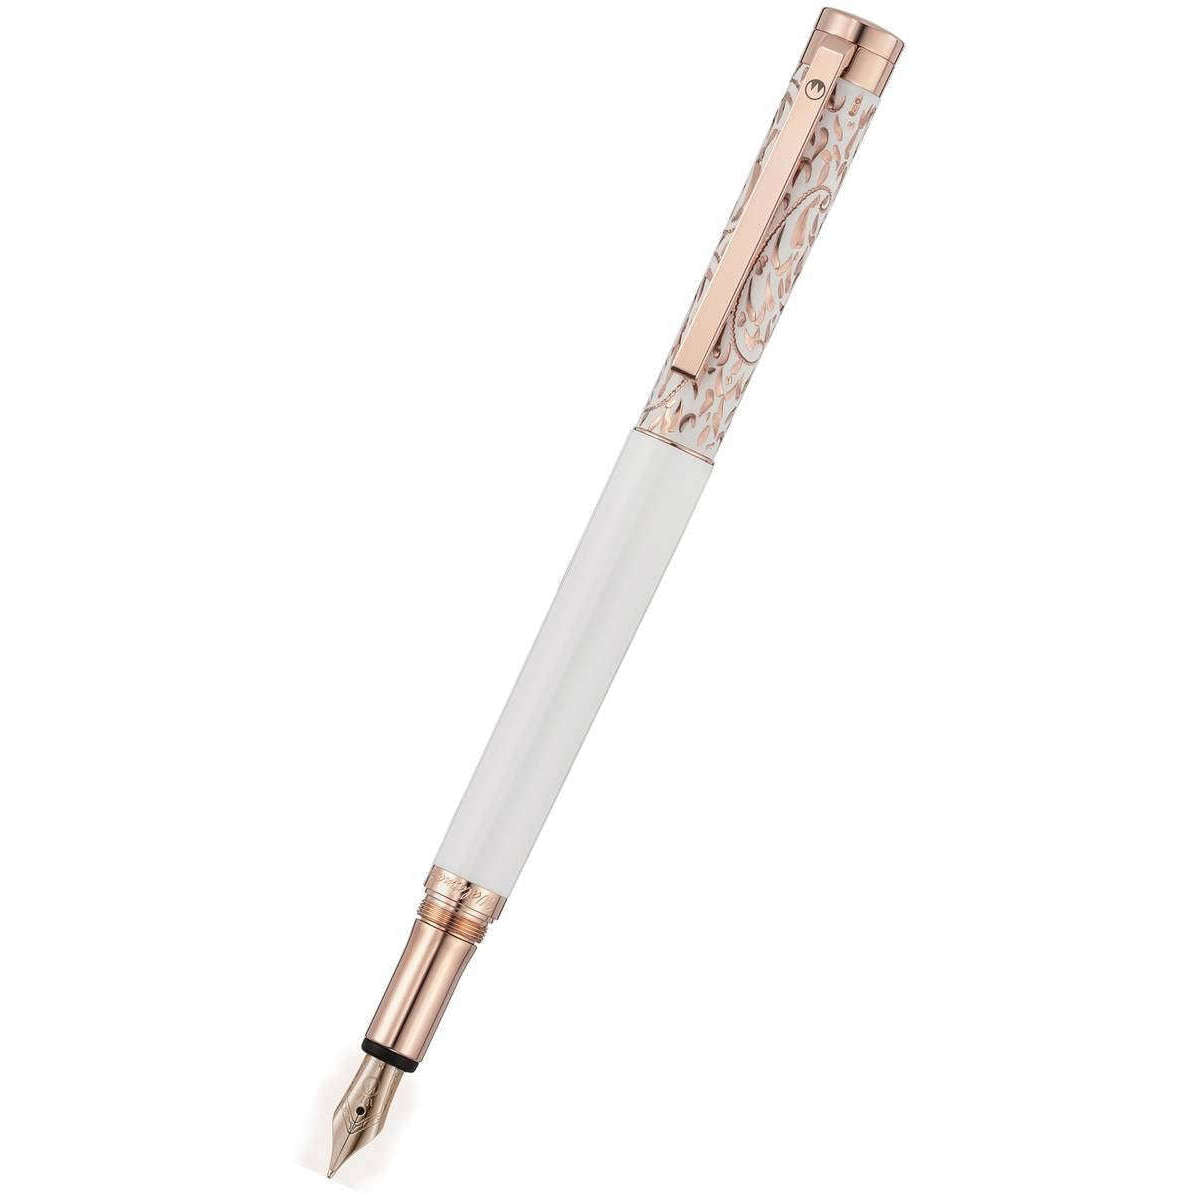 Waldmann Pens Xetra Vienna Lady Stainless Steel Nib Fountain Pen - White/Rose Gold